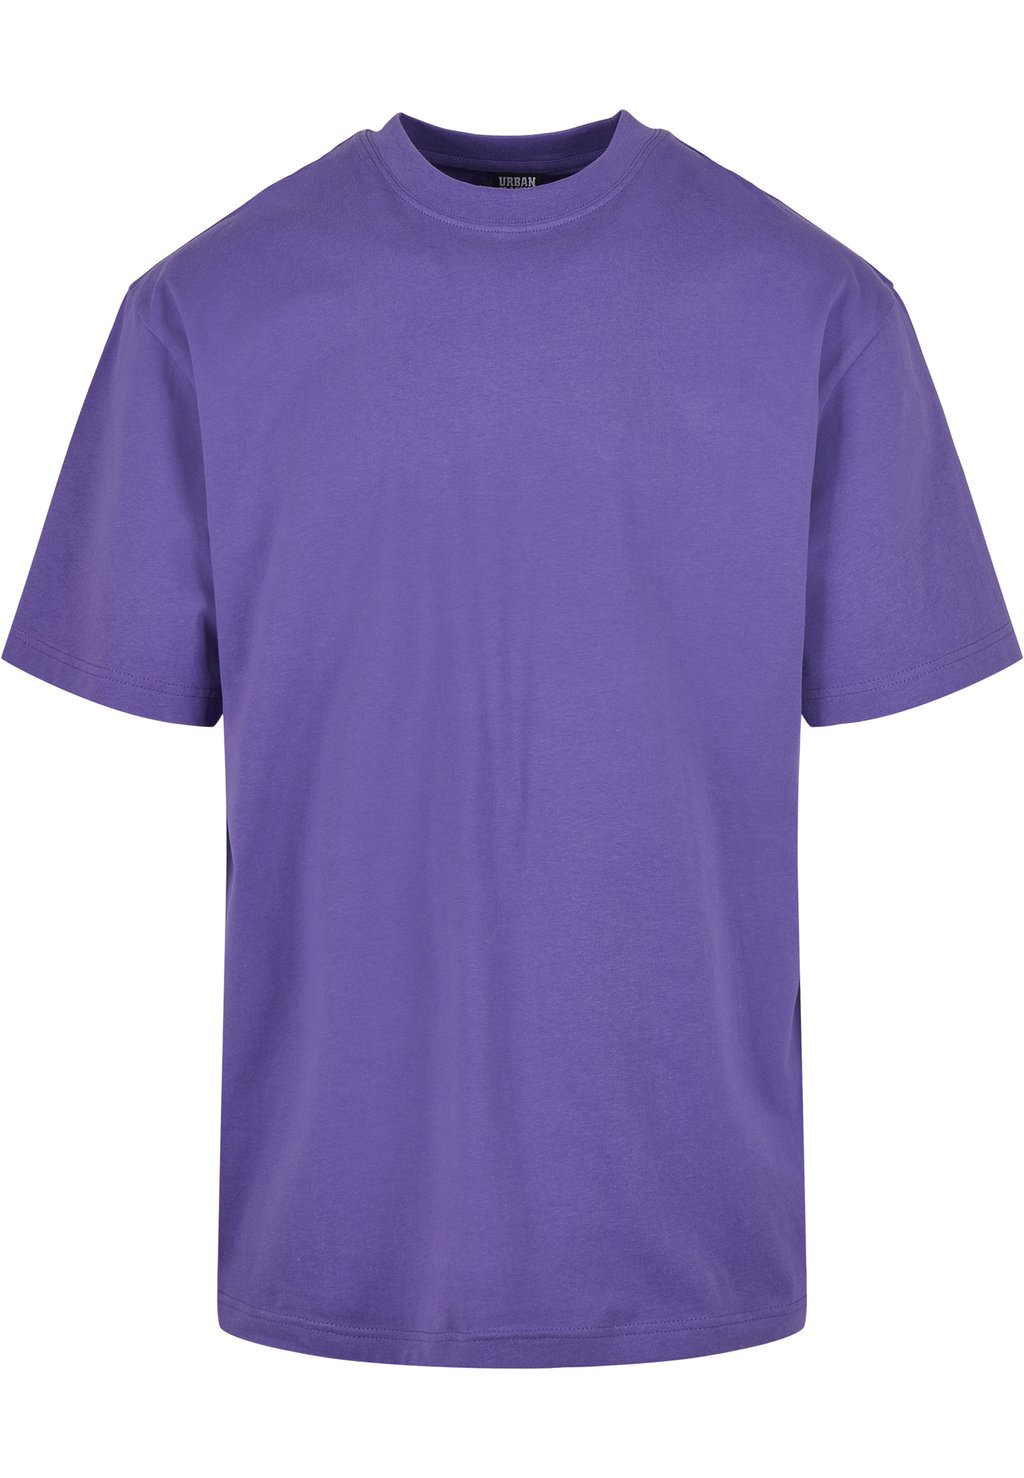 Базовая футболка TALL Urban Classics, ультрафиолет